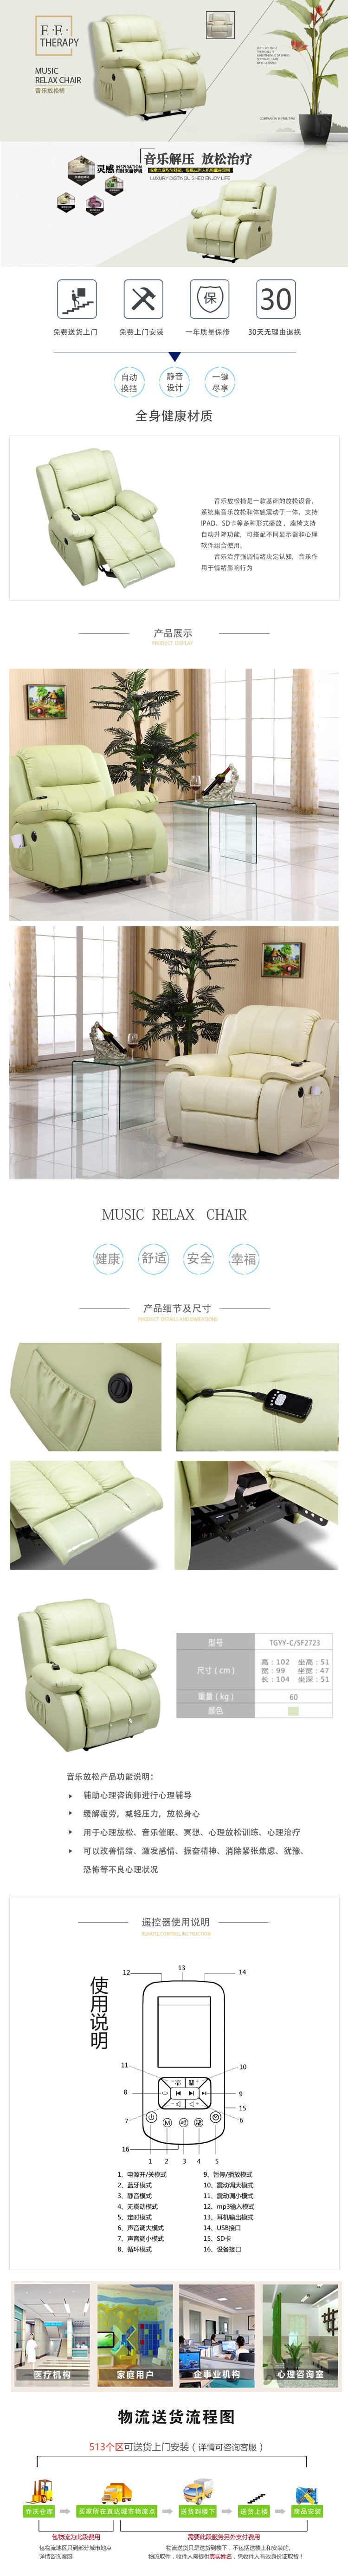 Body feeling music relaxing massage sofa chair